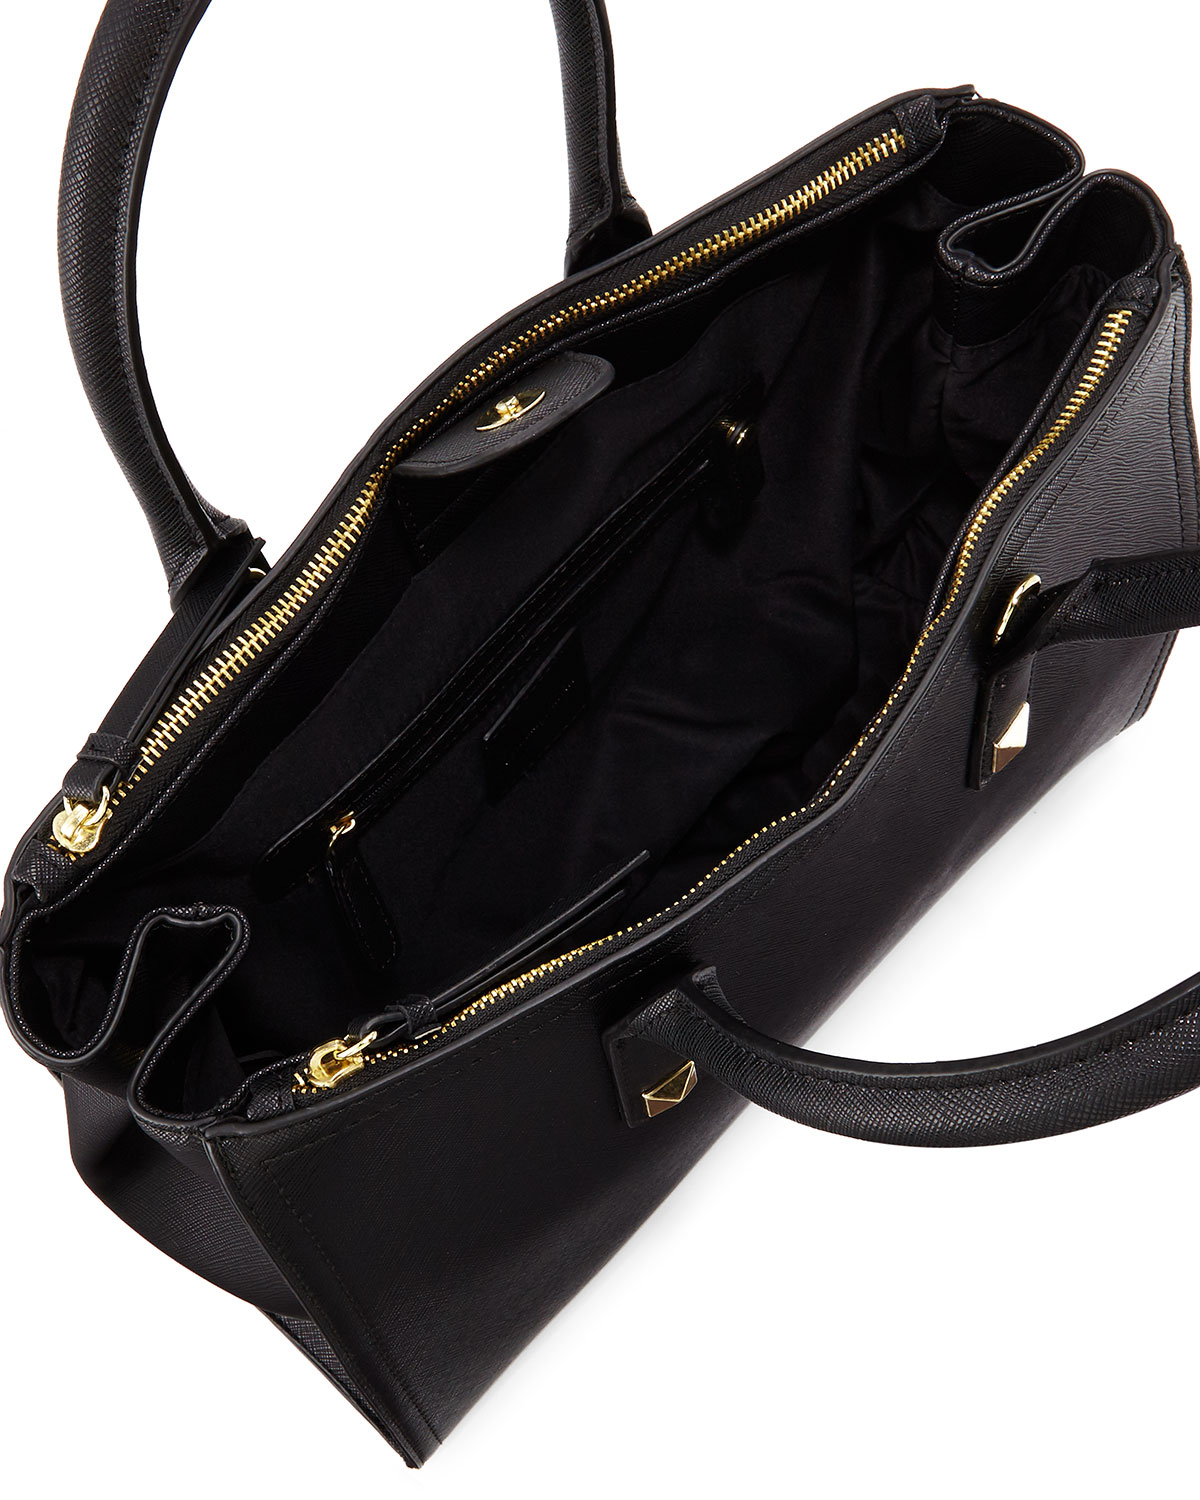 Lyst - Neiman Marcus Studded Double-zip Tote Bag in Black